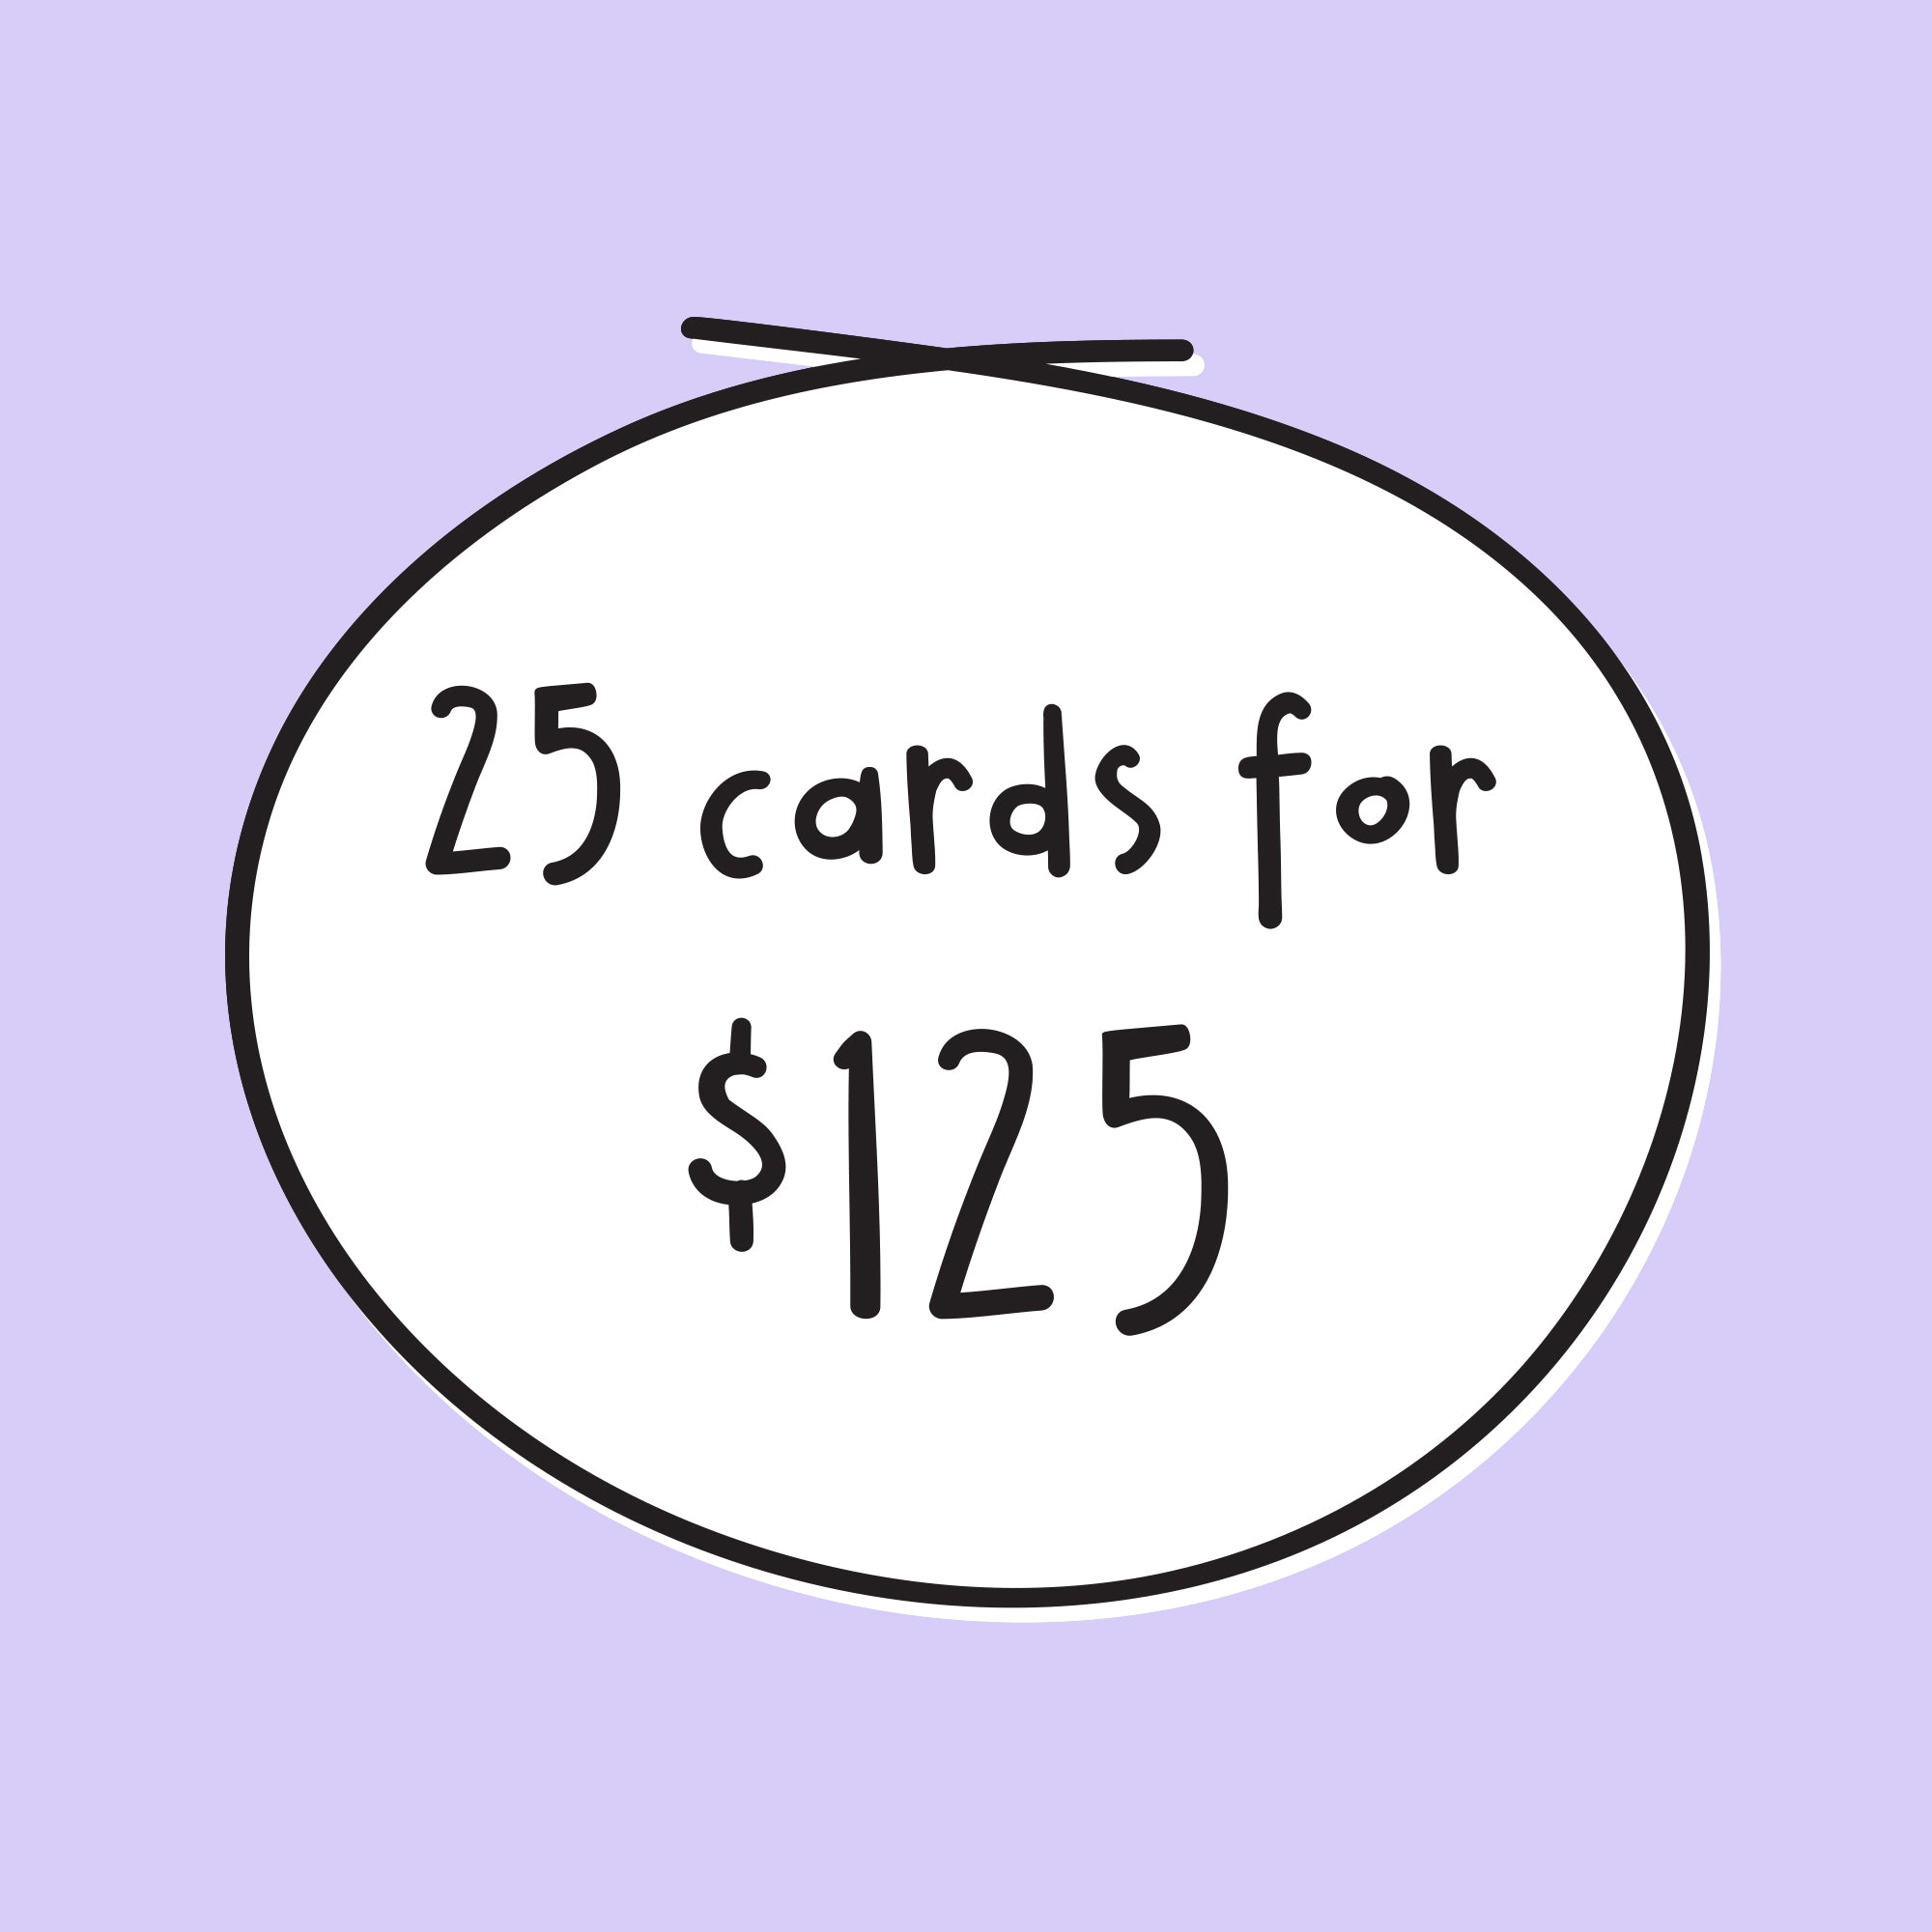 25 Card Bundle Deal